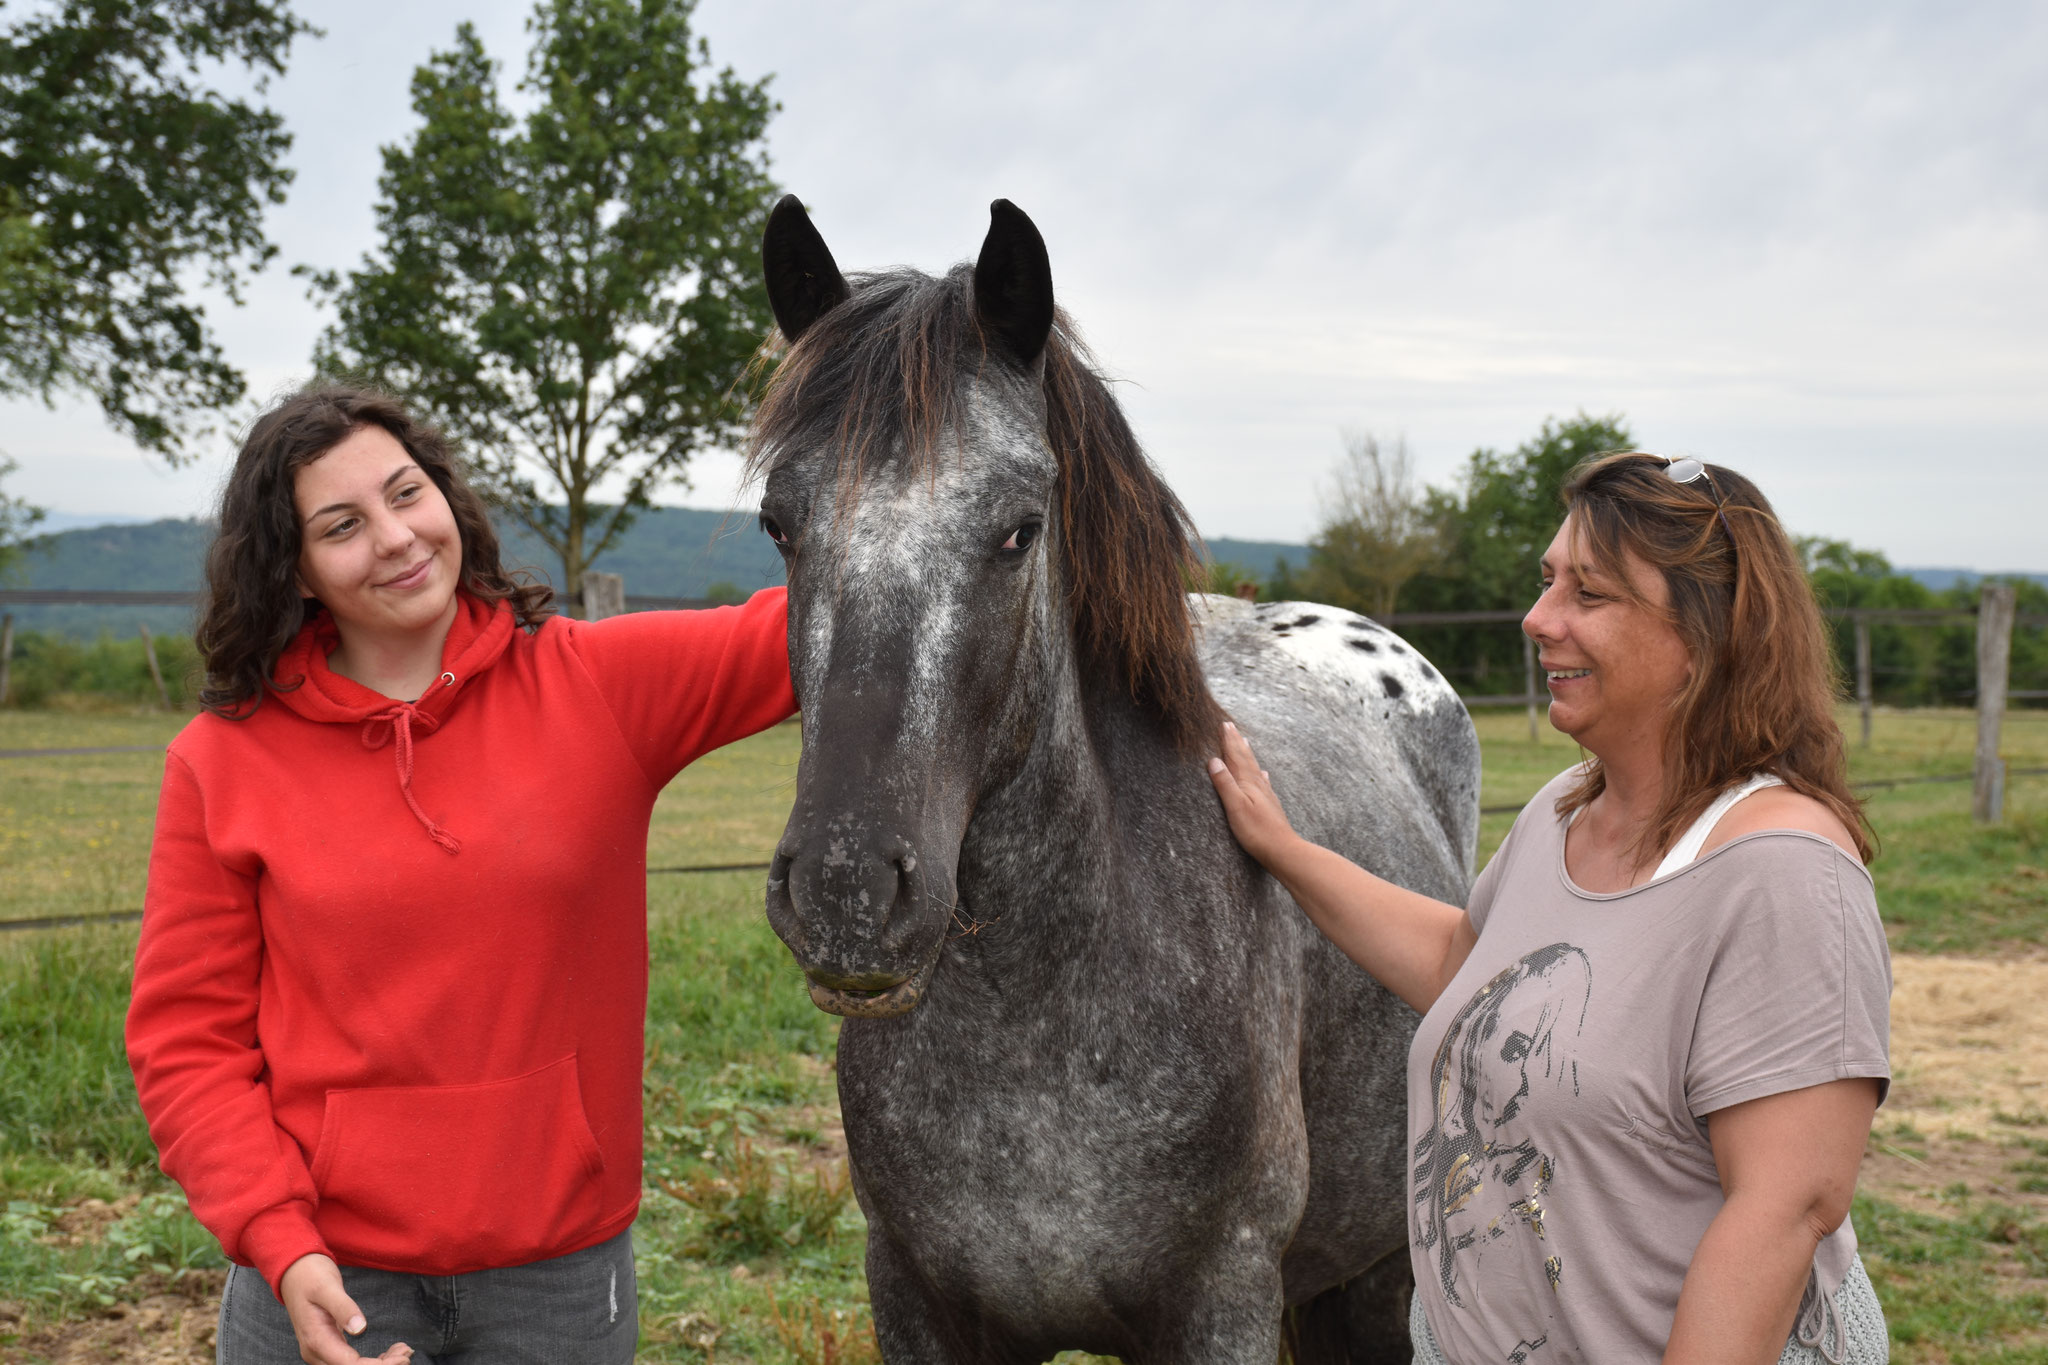 Gazelle d'Ensalers adoptée par Eve et Christelle en juillet 2019